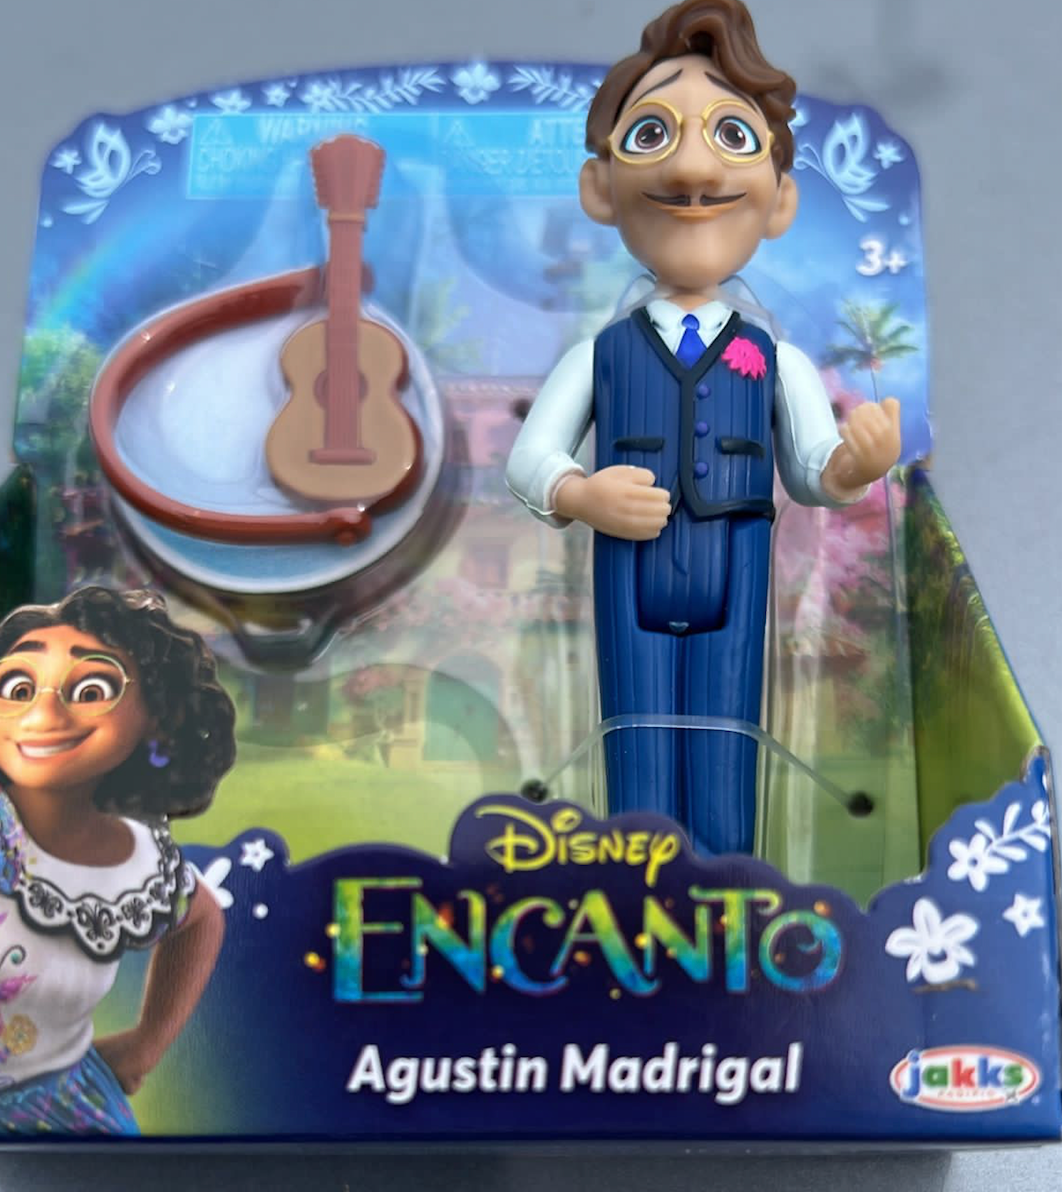 Disney Encanto Agustin Madrigal Small Doll Toy New with Box – I